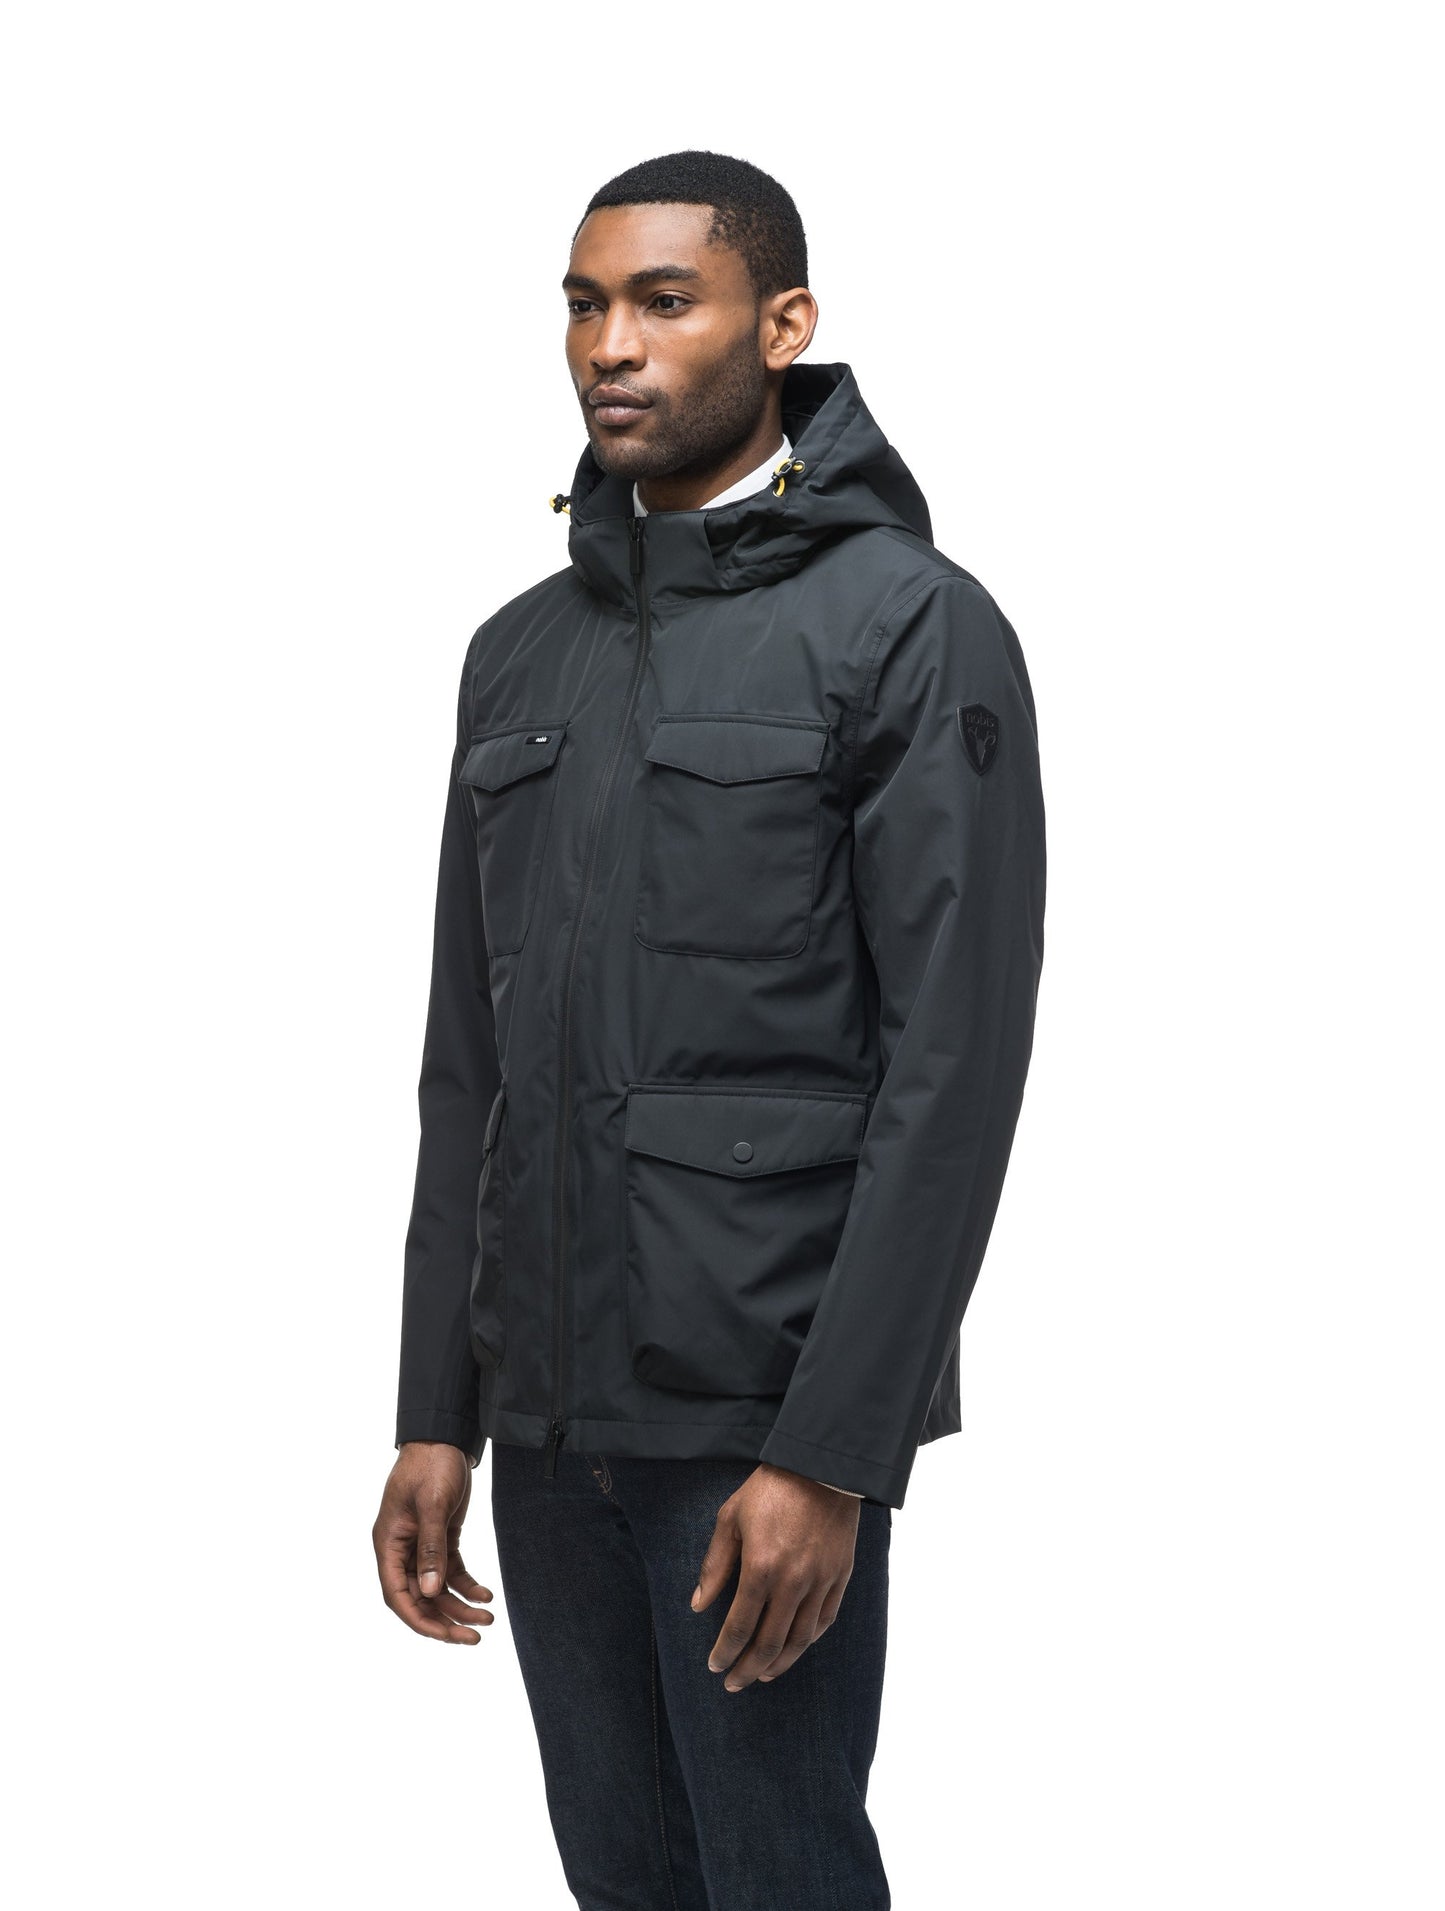 Men's waist length jacket in Black